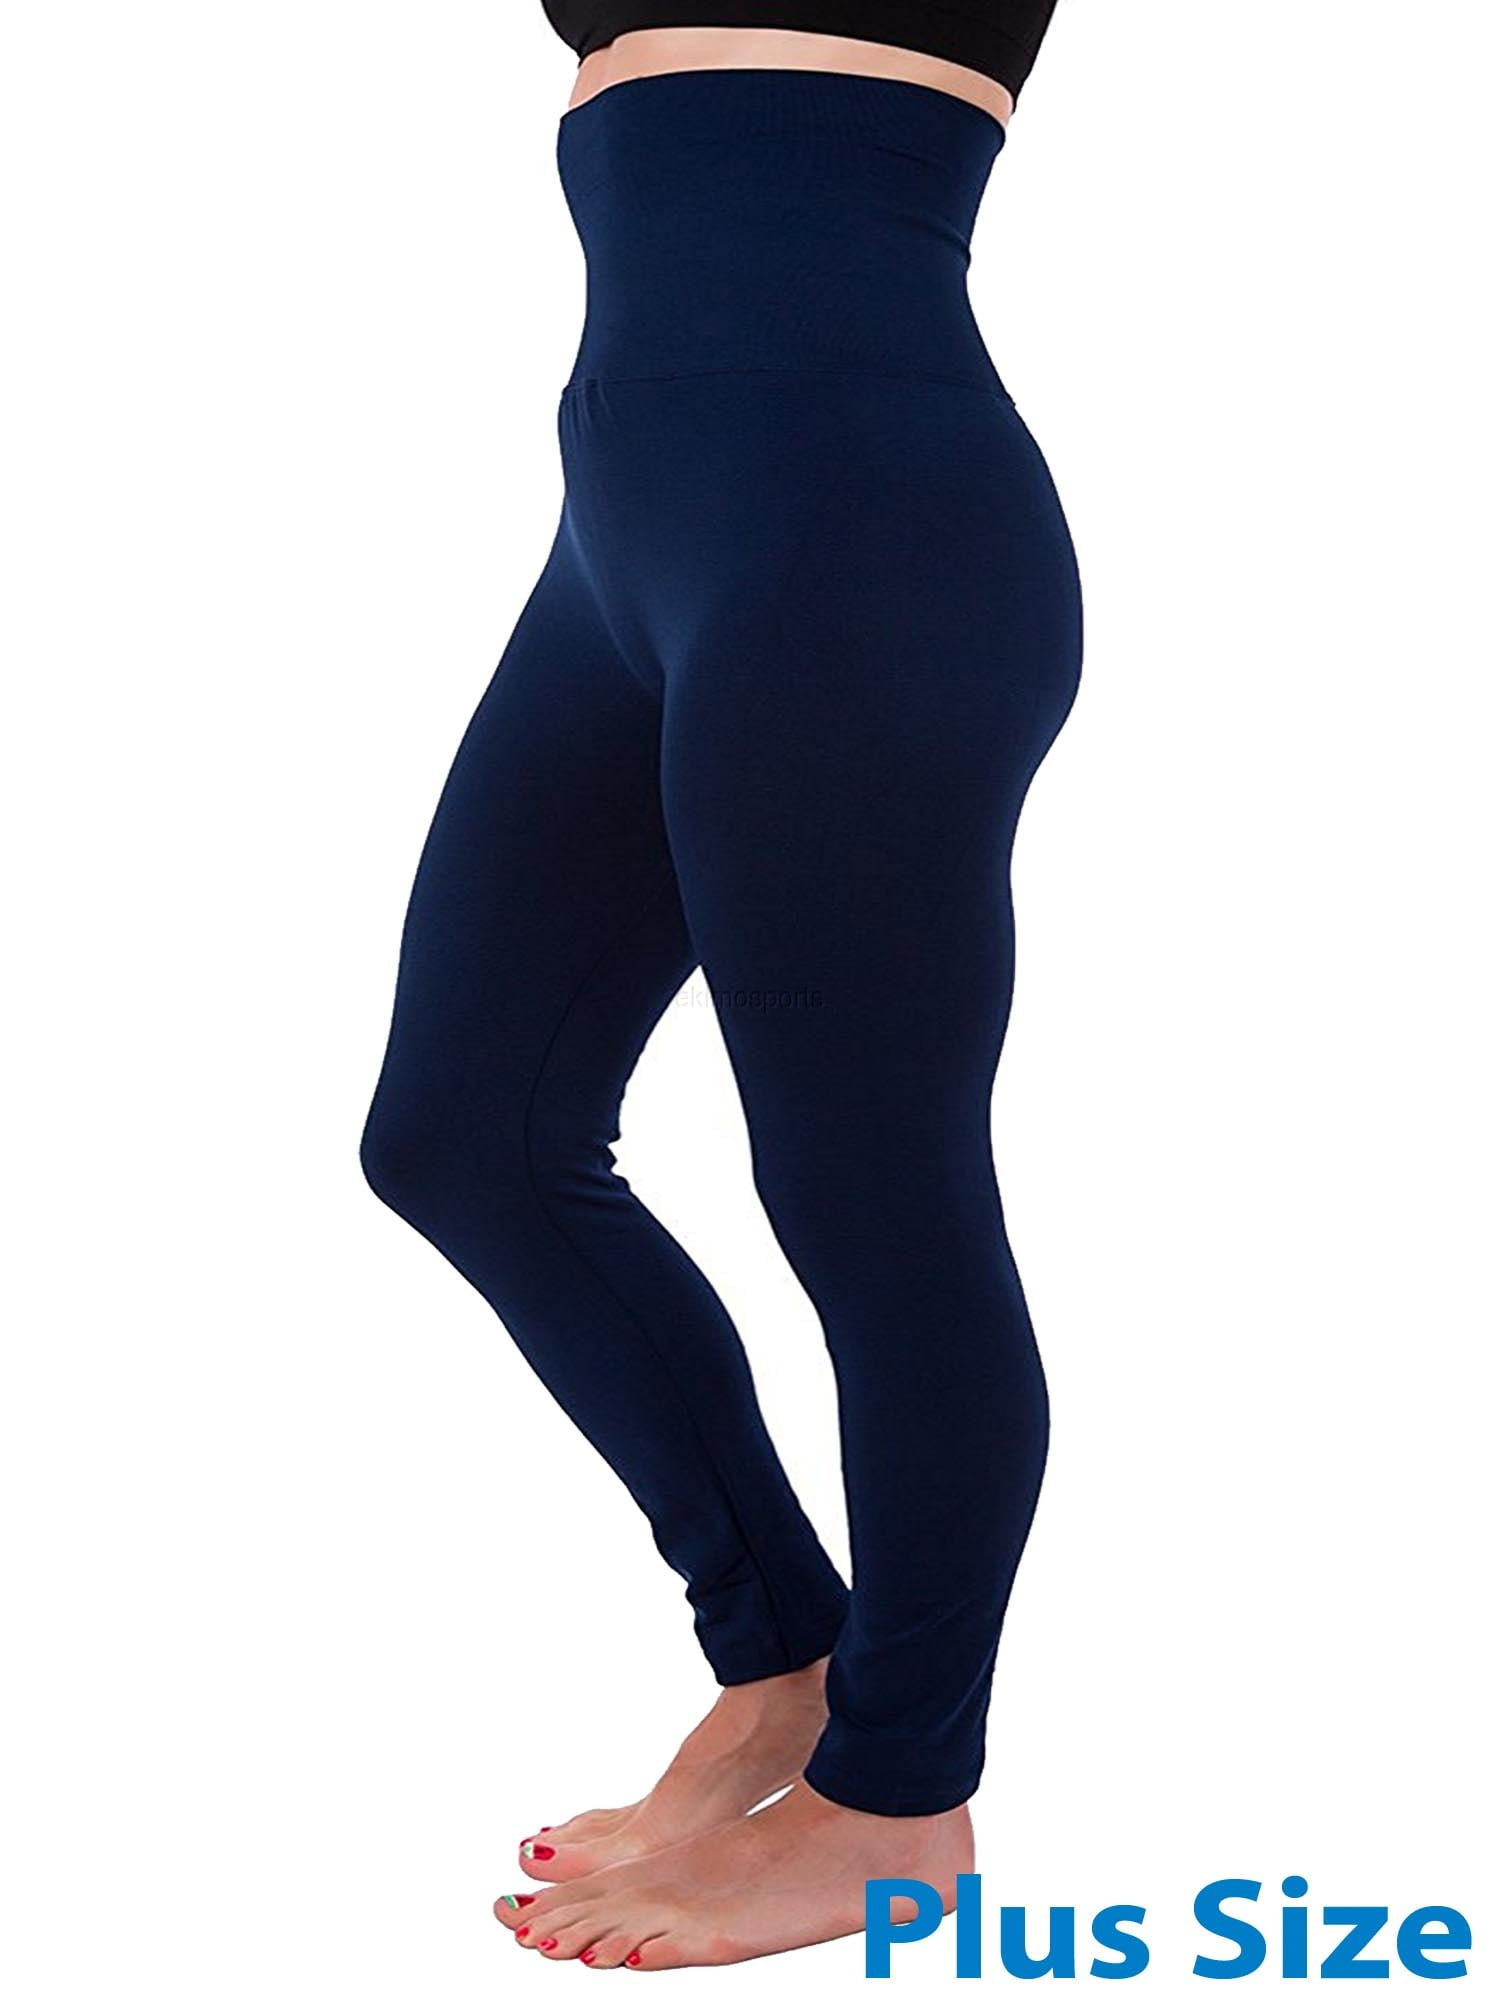 Waist Control Full Length Legging Compression Top Pants Fleece Lined Plus Size XL - Walmart.com